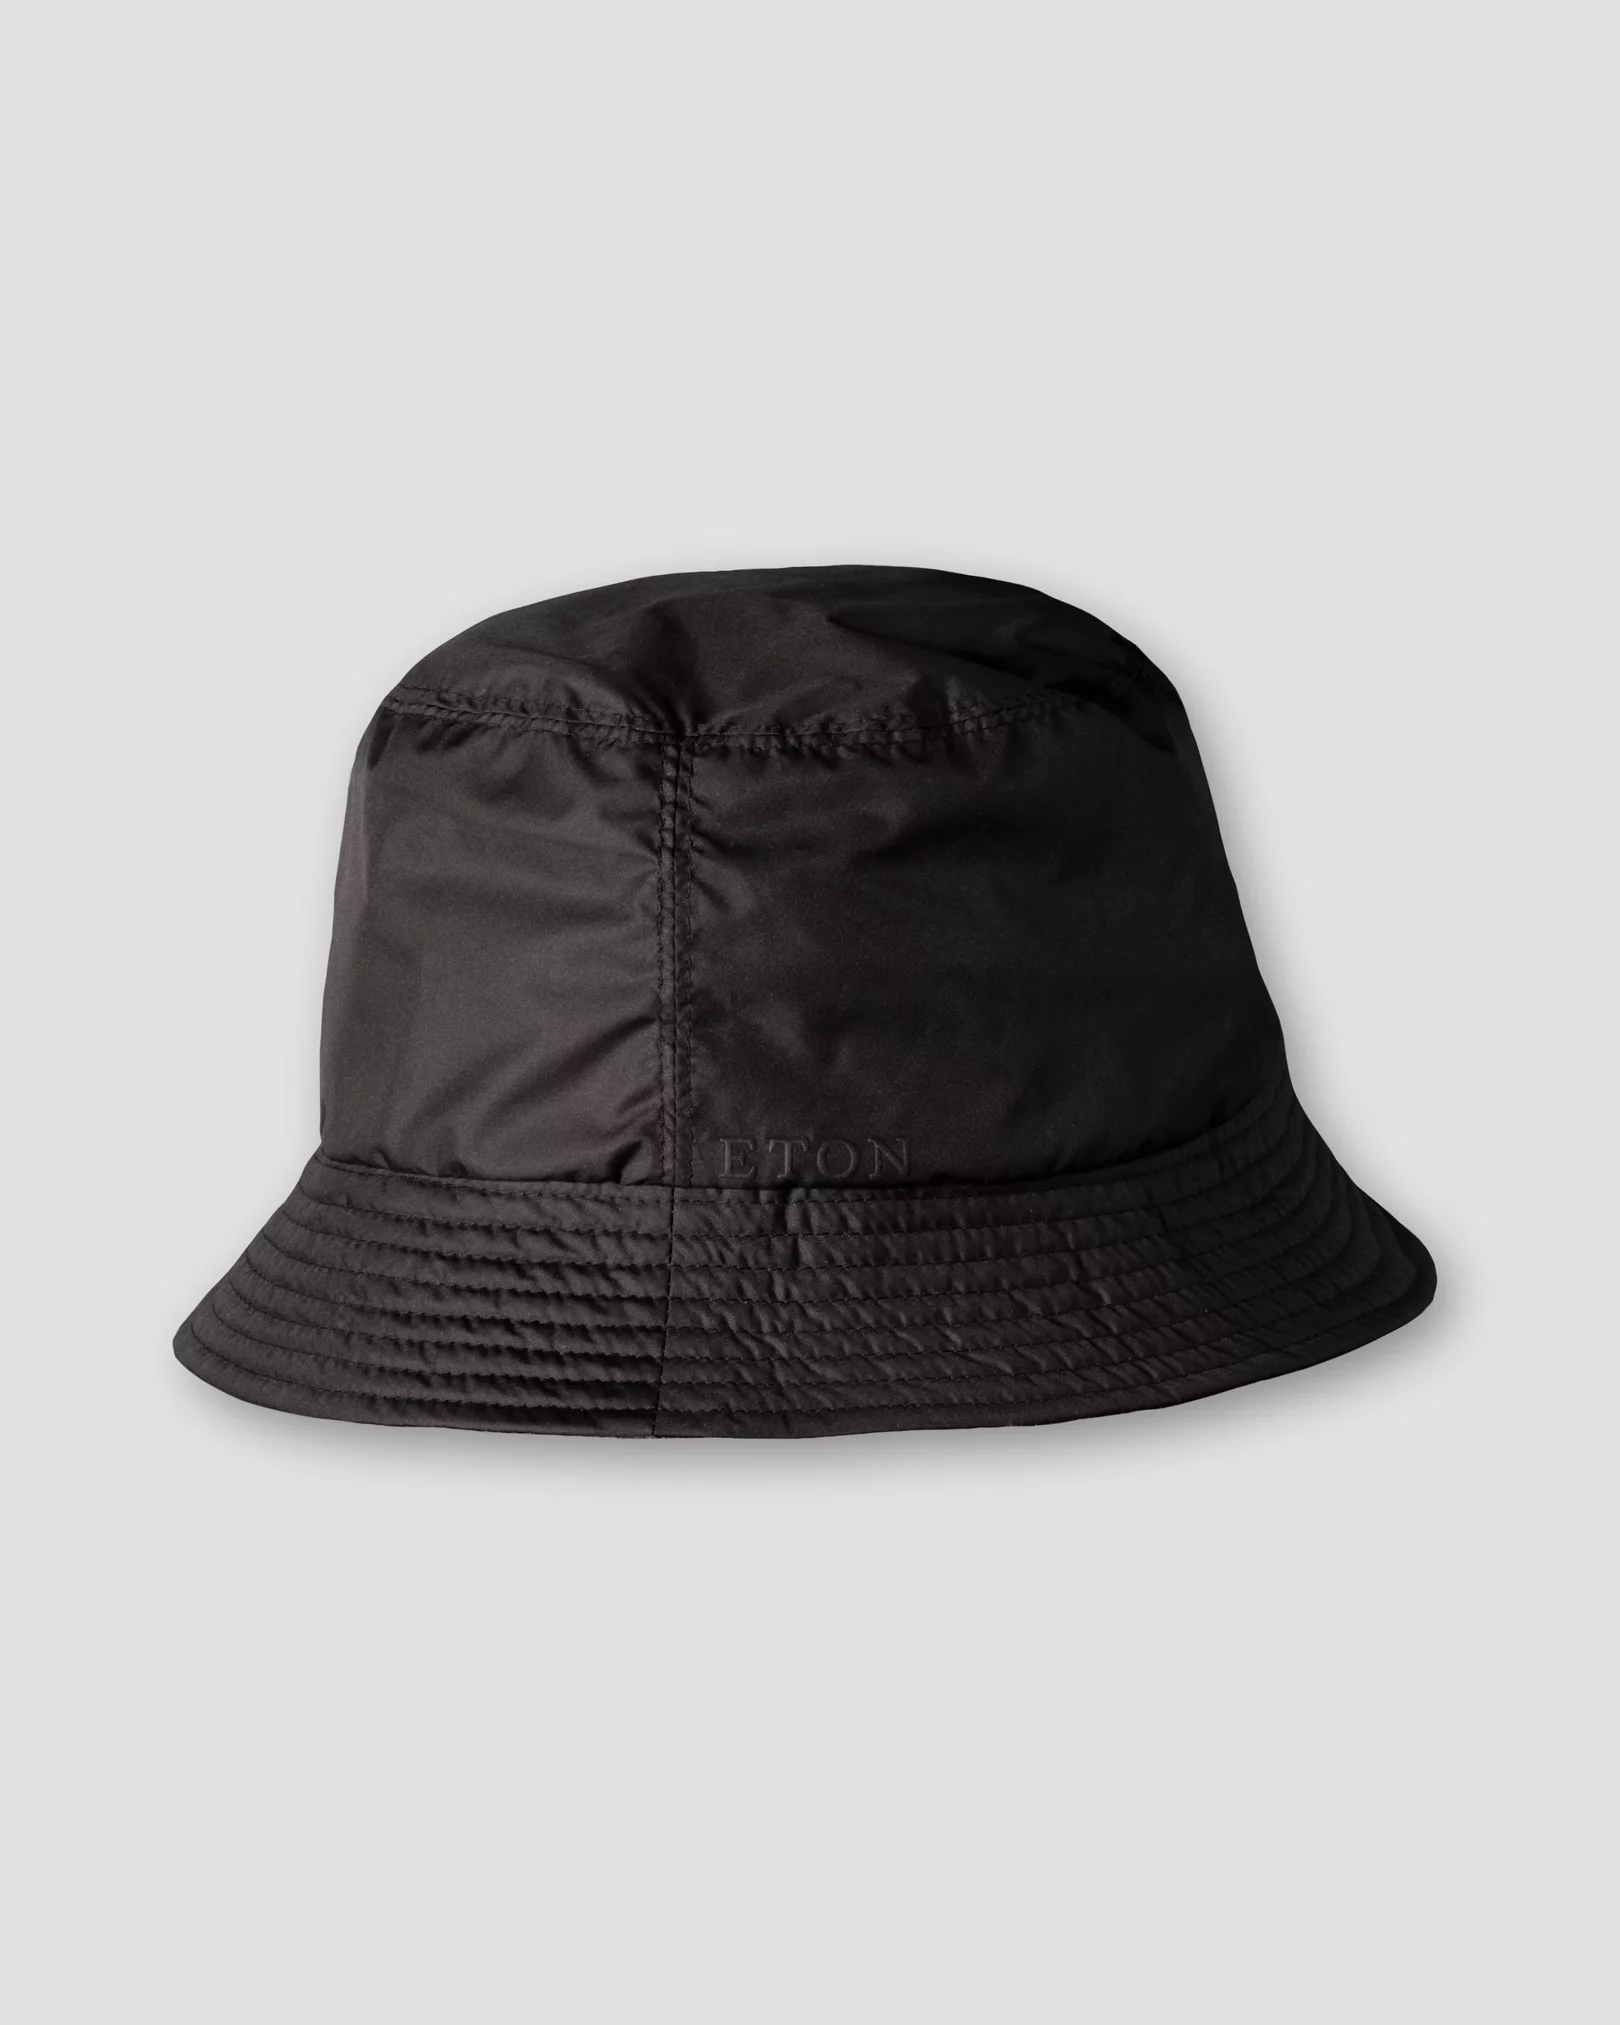 Black & Chains Reversible Bucket Hat - Eton